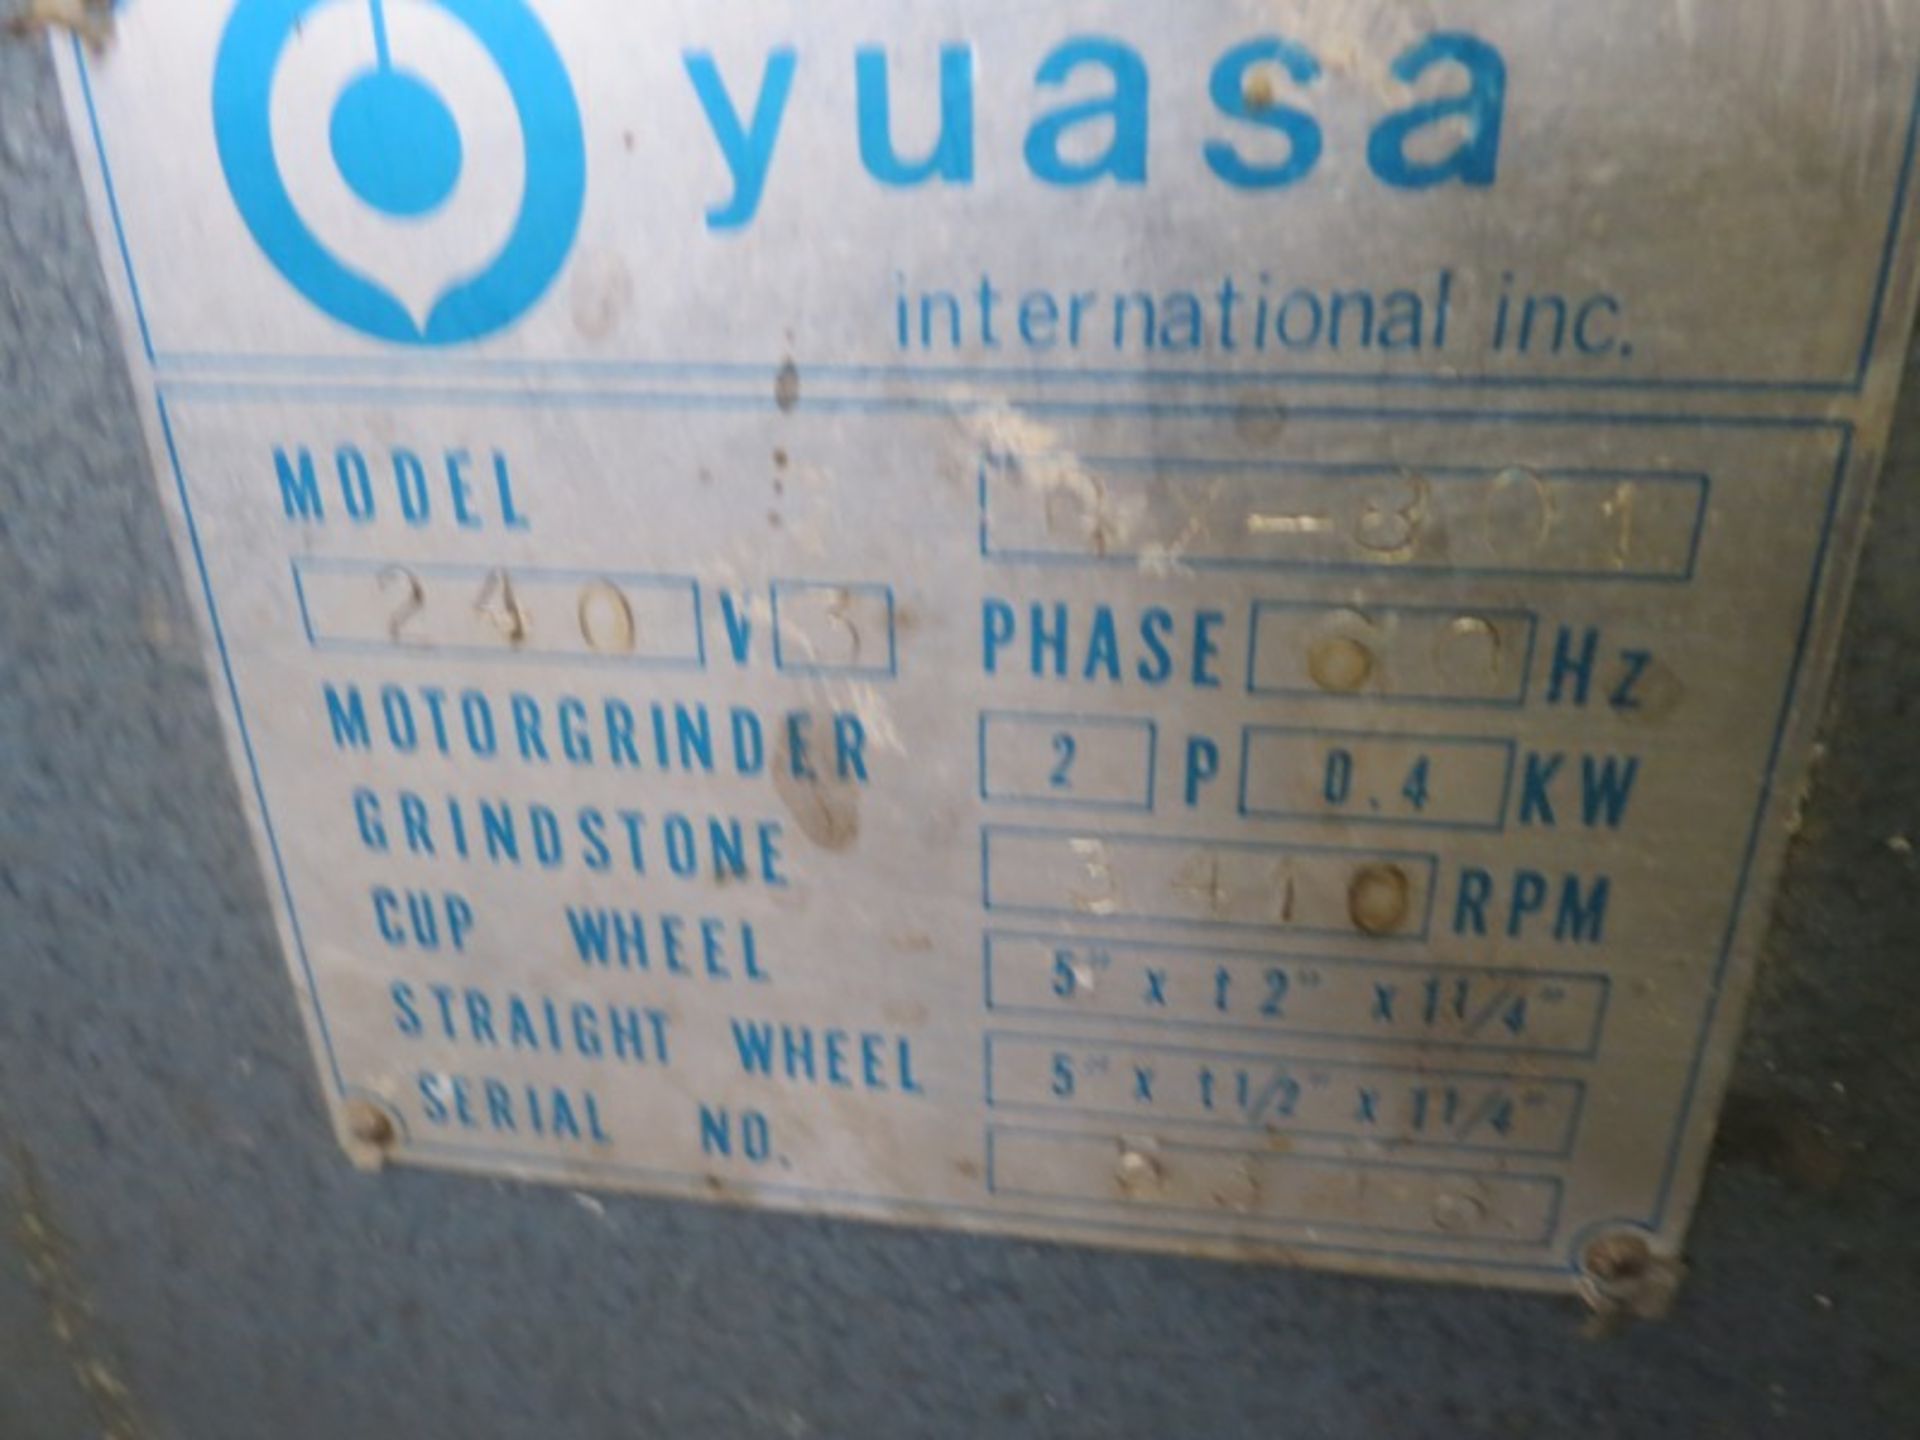 Yuasa Model GX-801 Tool Cutter / Grinder - Image 4 of 4